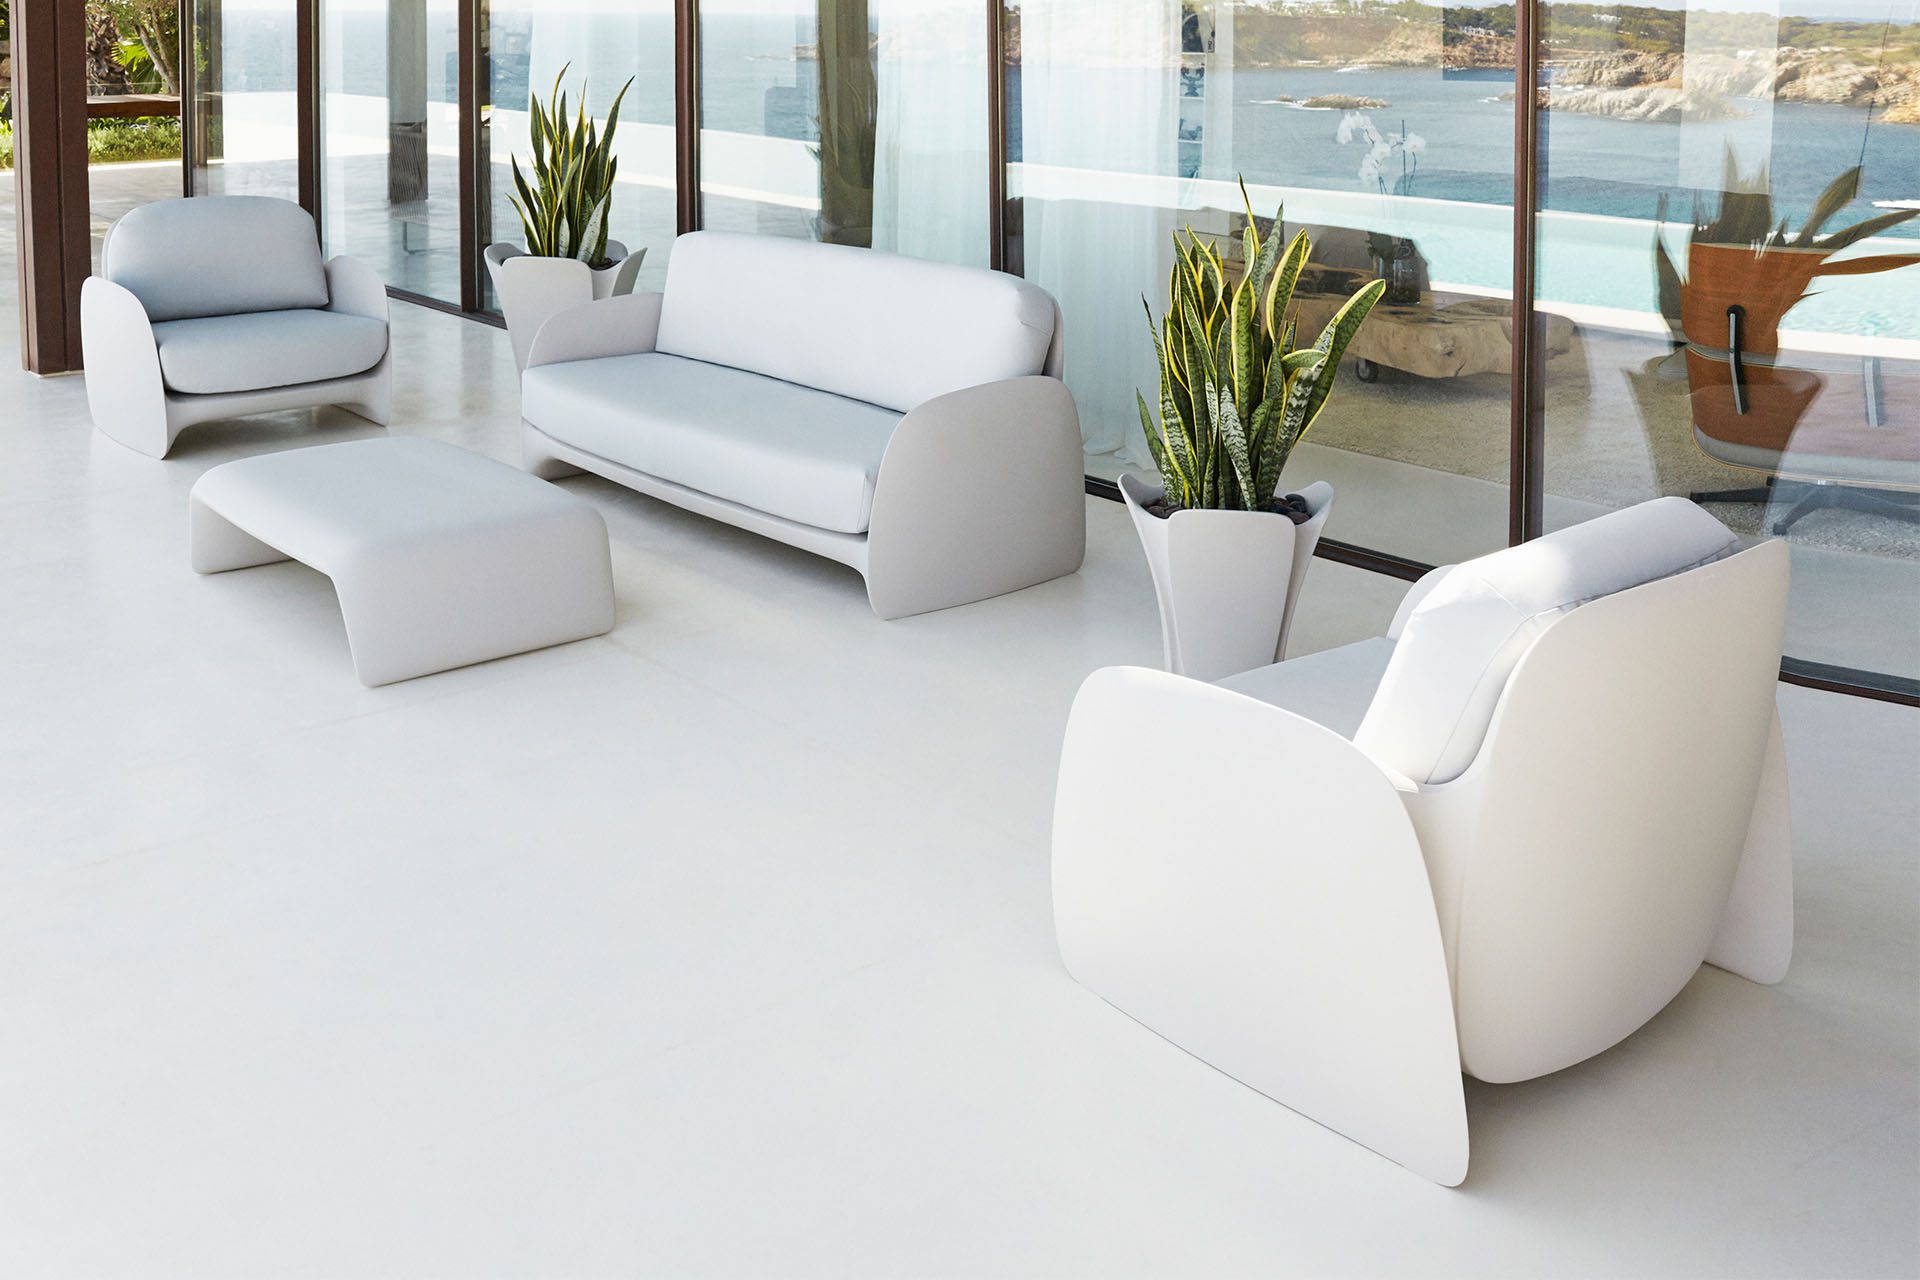 Pezzettina armchairs, sofa, table and planters Vondom